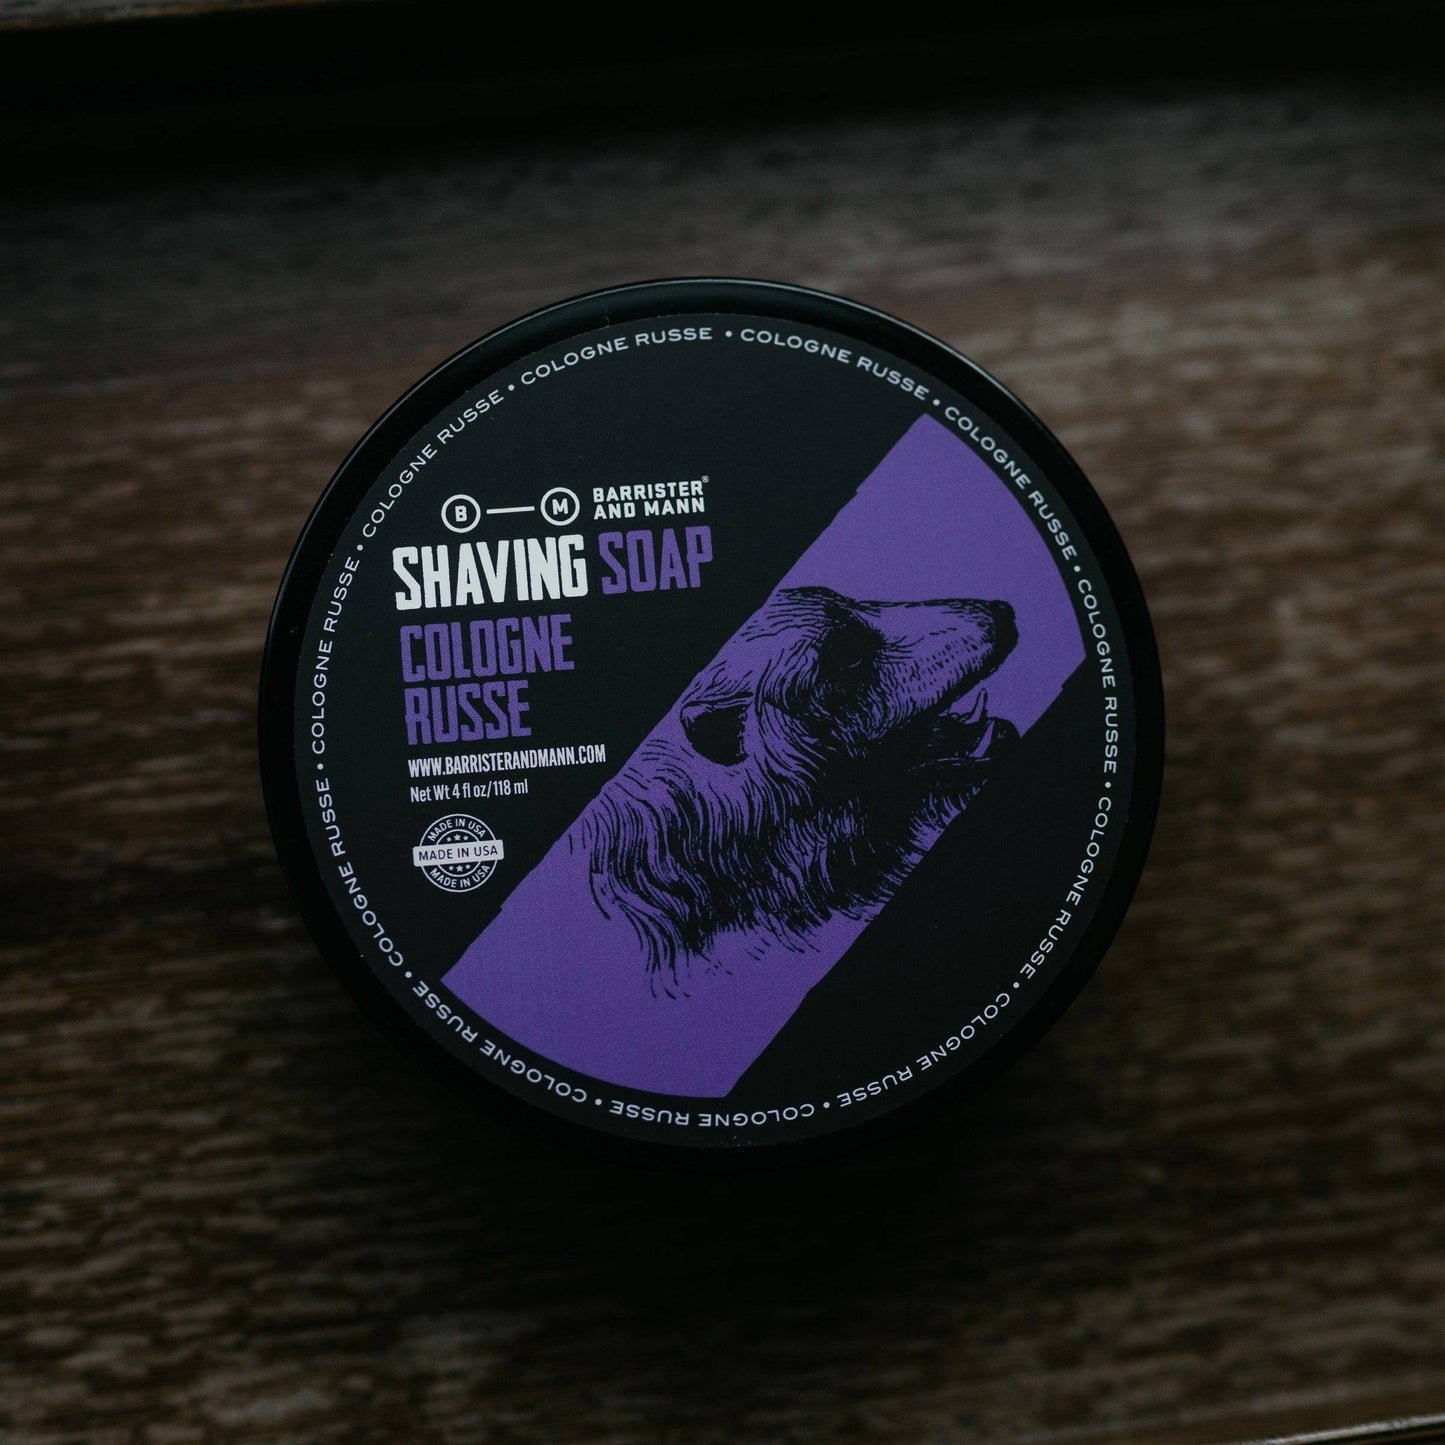 Cologne Russe Shaving Soap